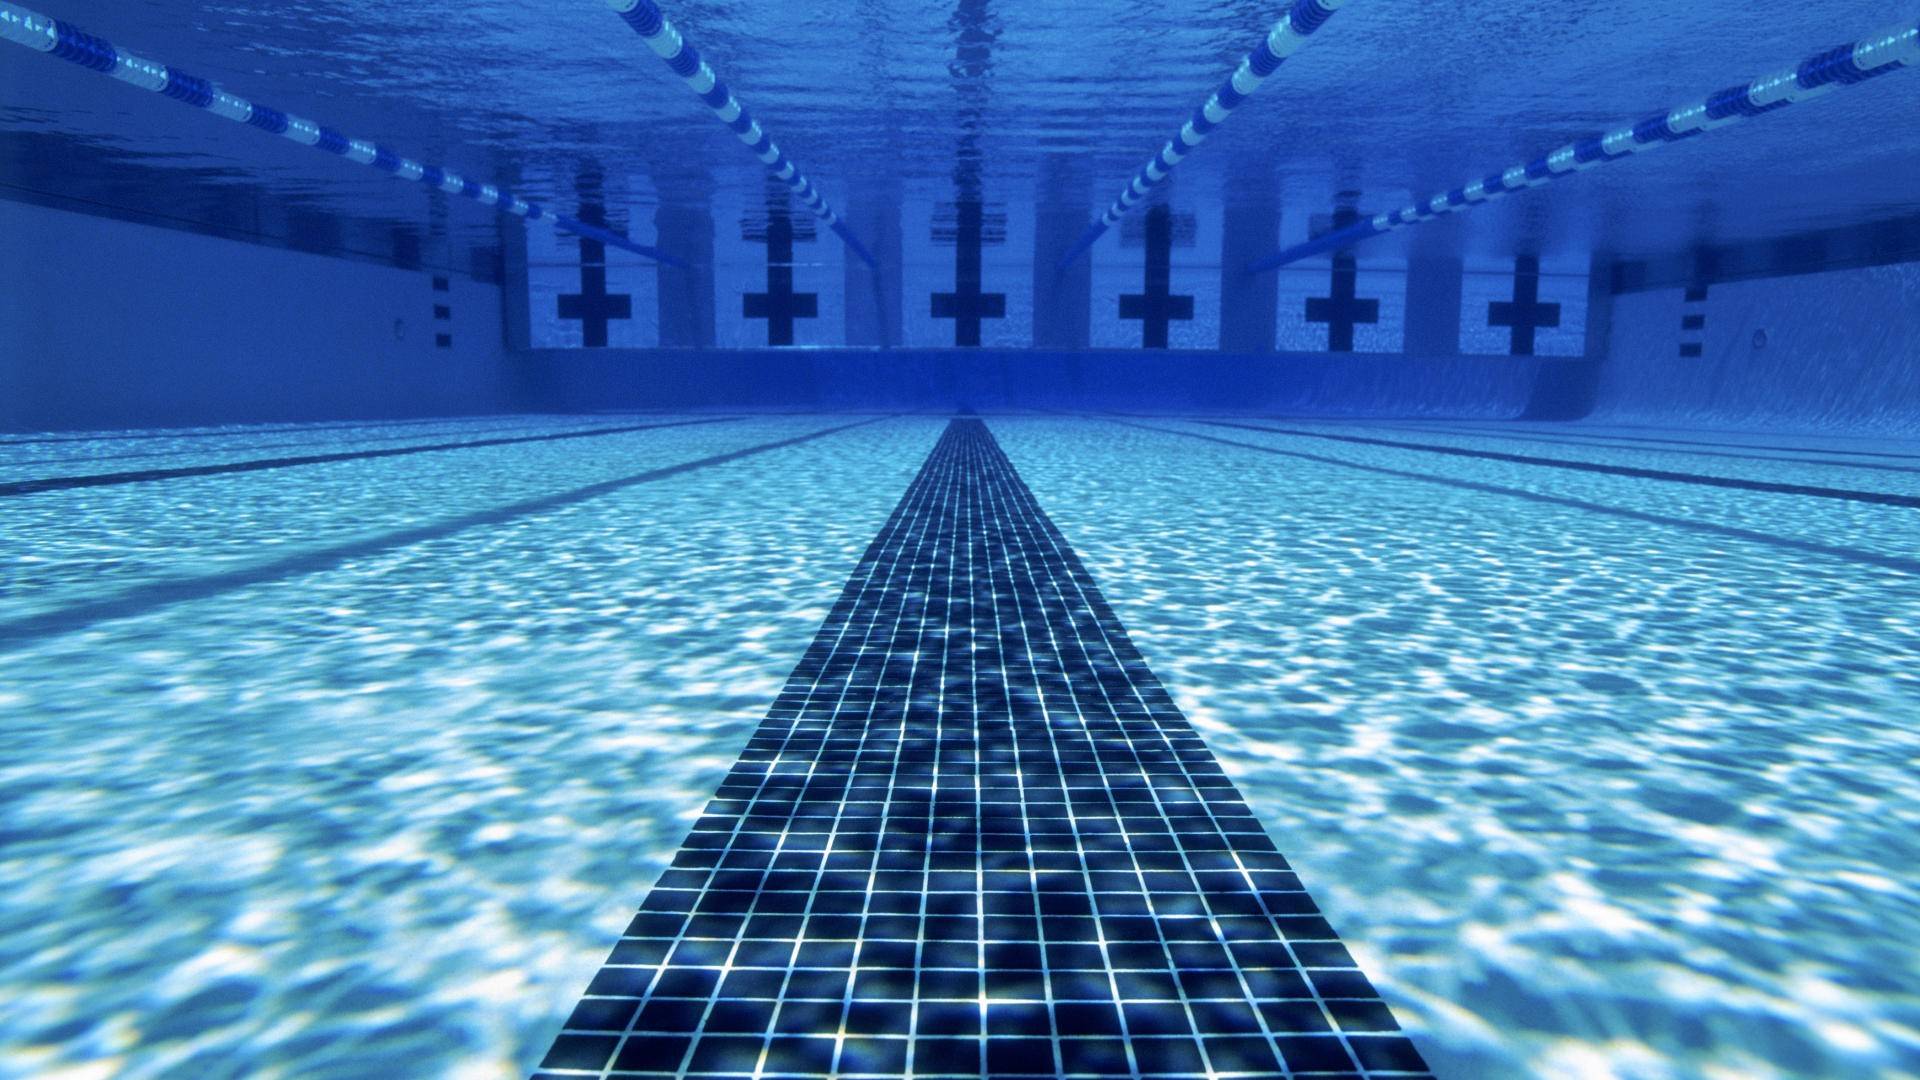 Swimming Pool Hd Wallpapers | Free HD Desktop Wallpapers ...